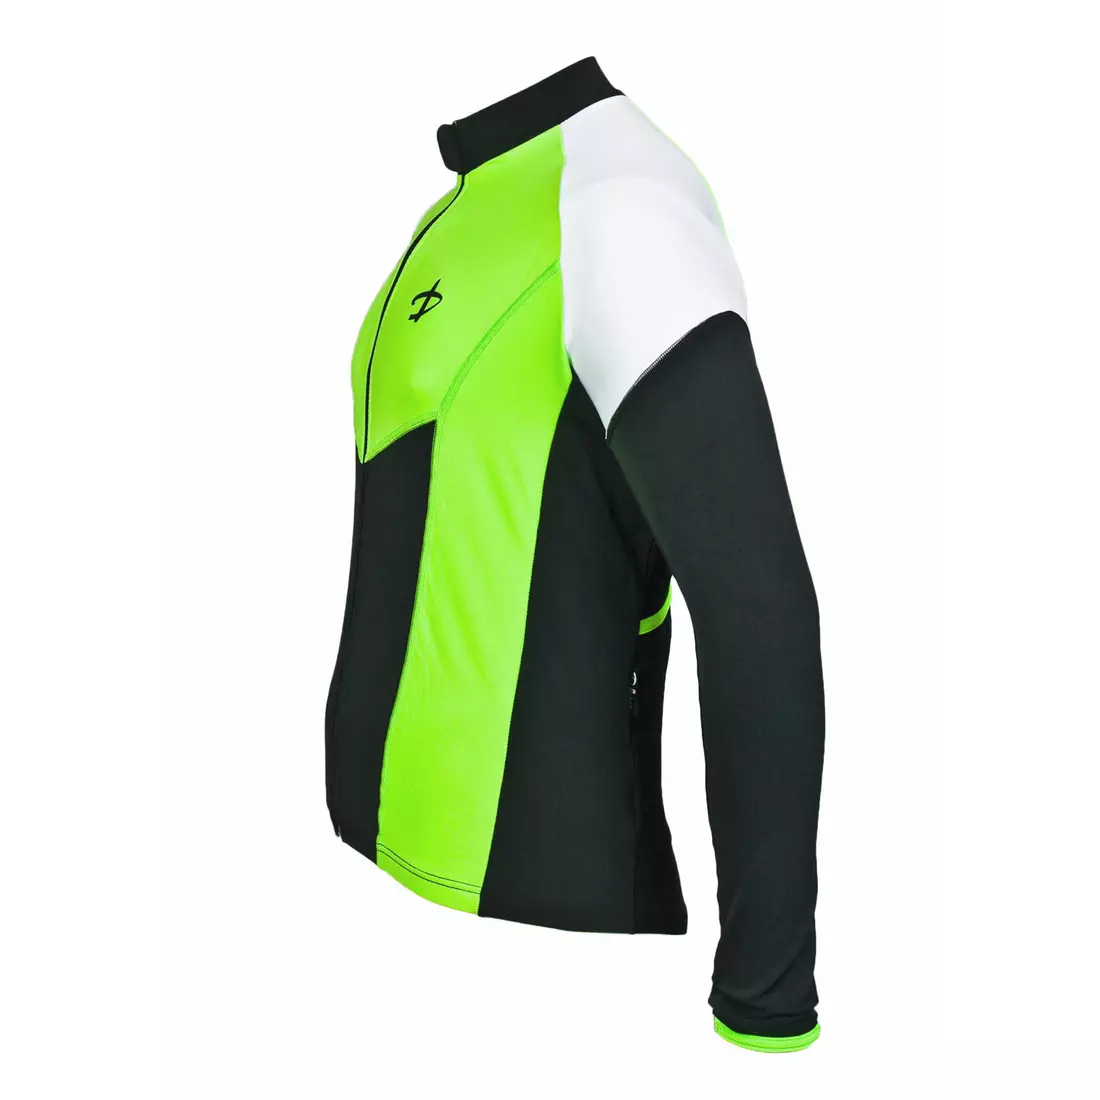 DEKO HALF men's cycling sweatshirt, fluorine-green-black